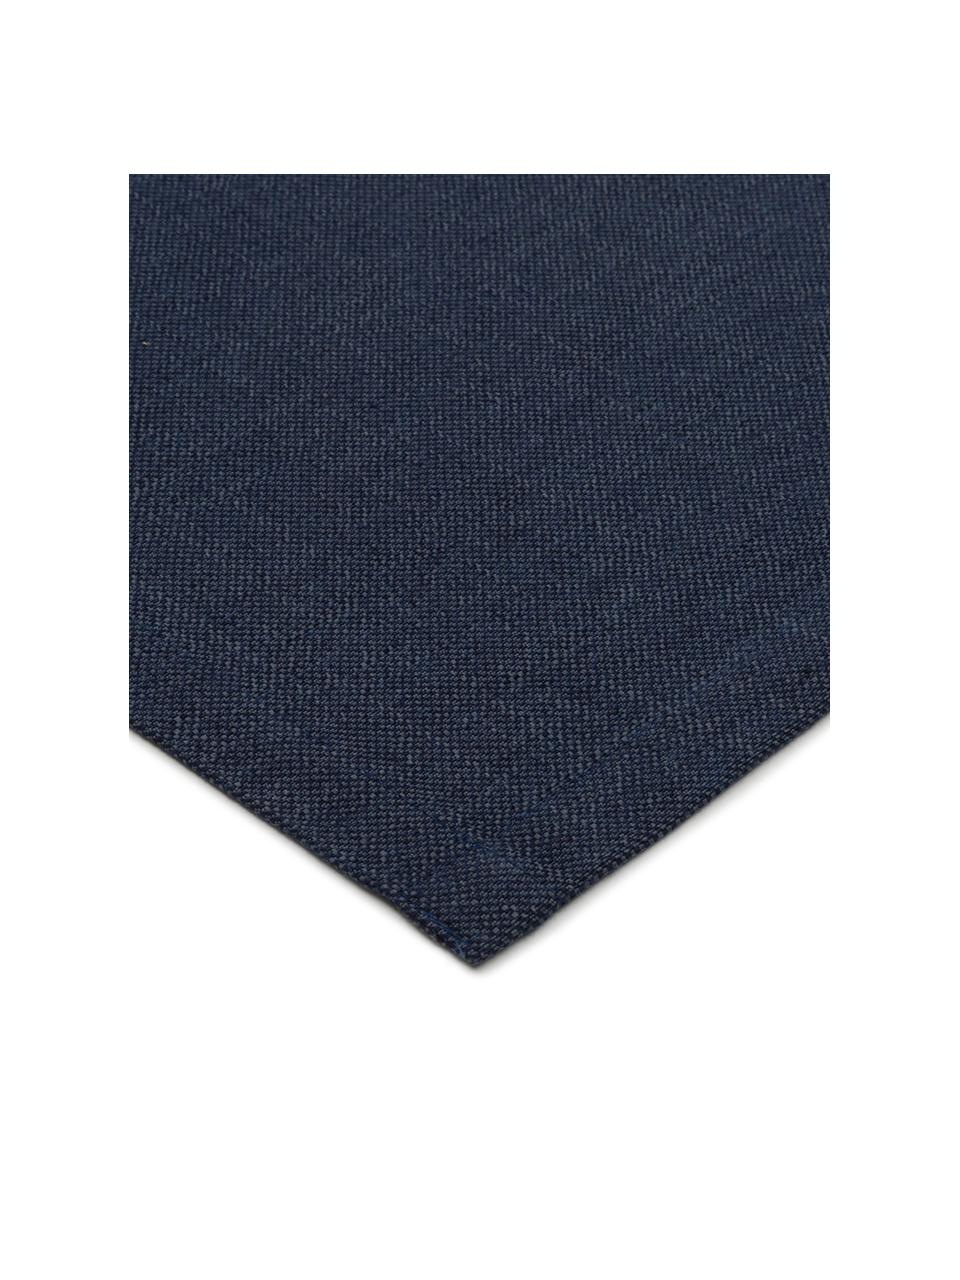 Chemin de table bleu Riva, 55 % coton, 45 % polyester, Bleu foncé, larg. 40 x long. 150 cm